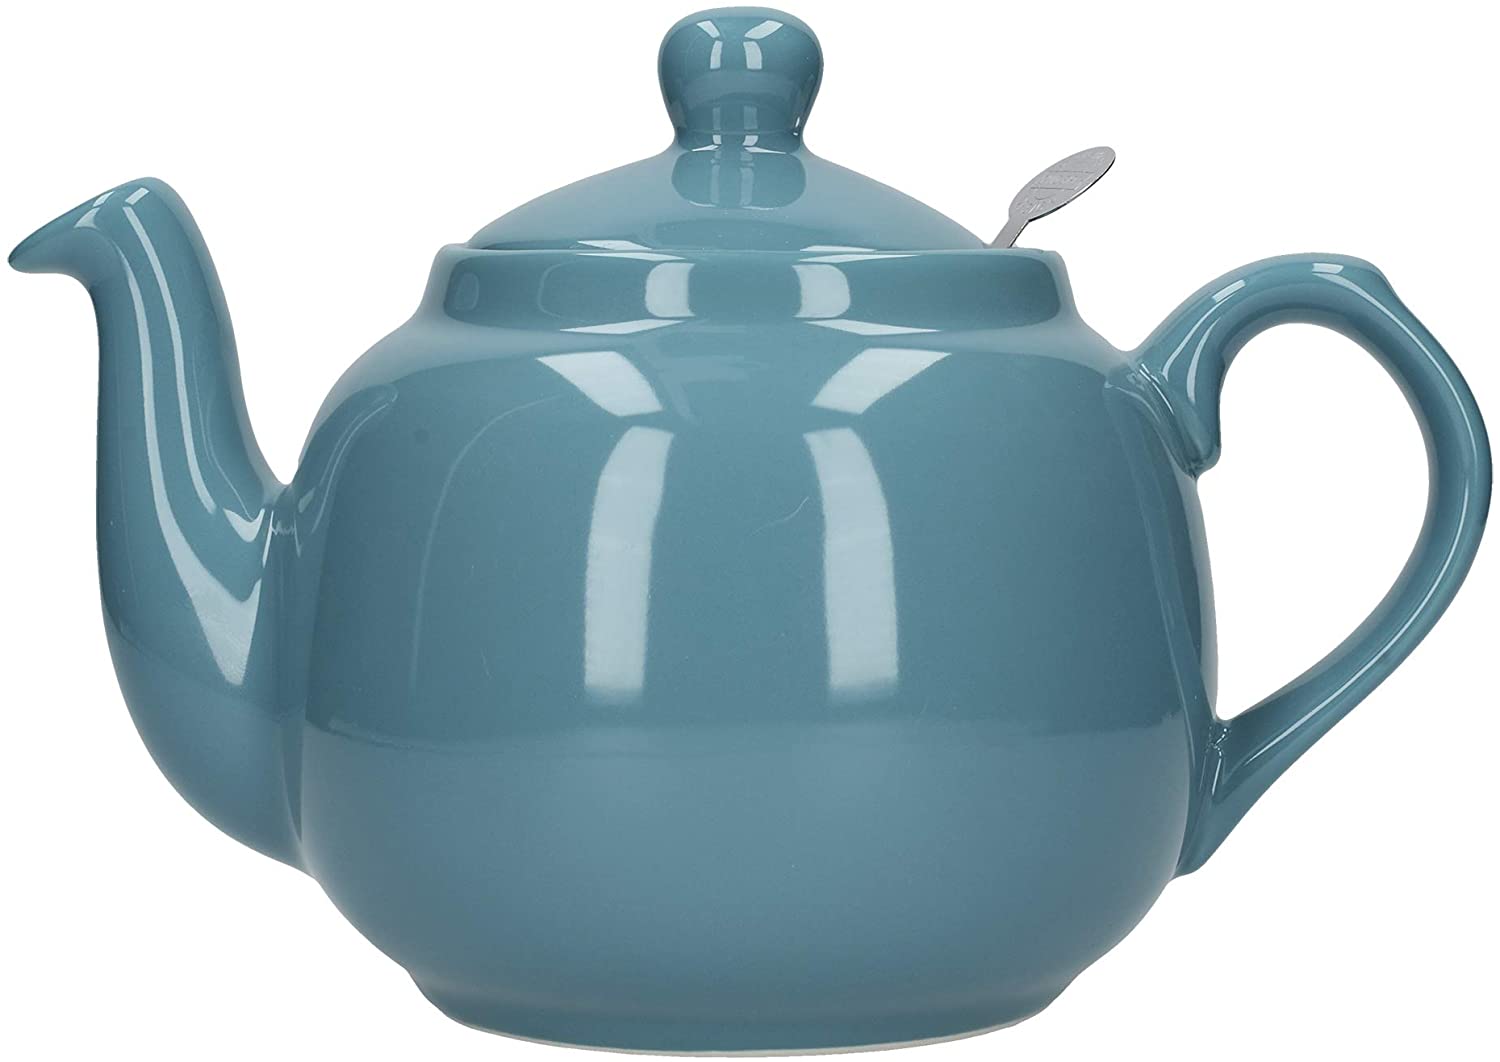 London Pottery Farmhouse Loose Leaf Teapot with Infuser, Ceramic, Aqua, 4 Cup (1.2 Litre)